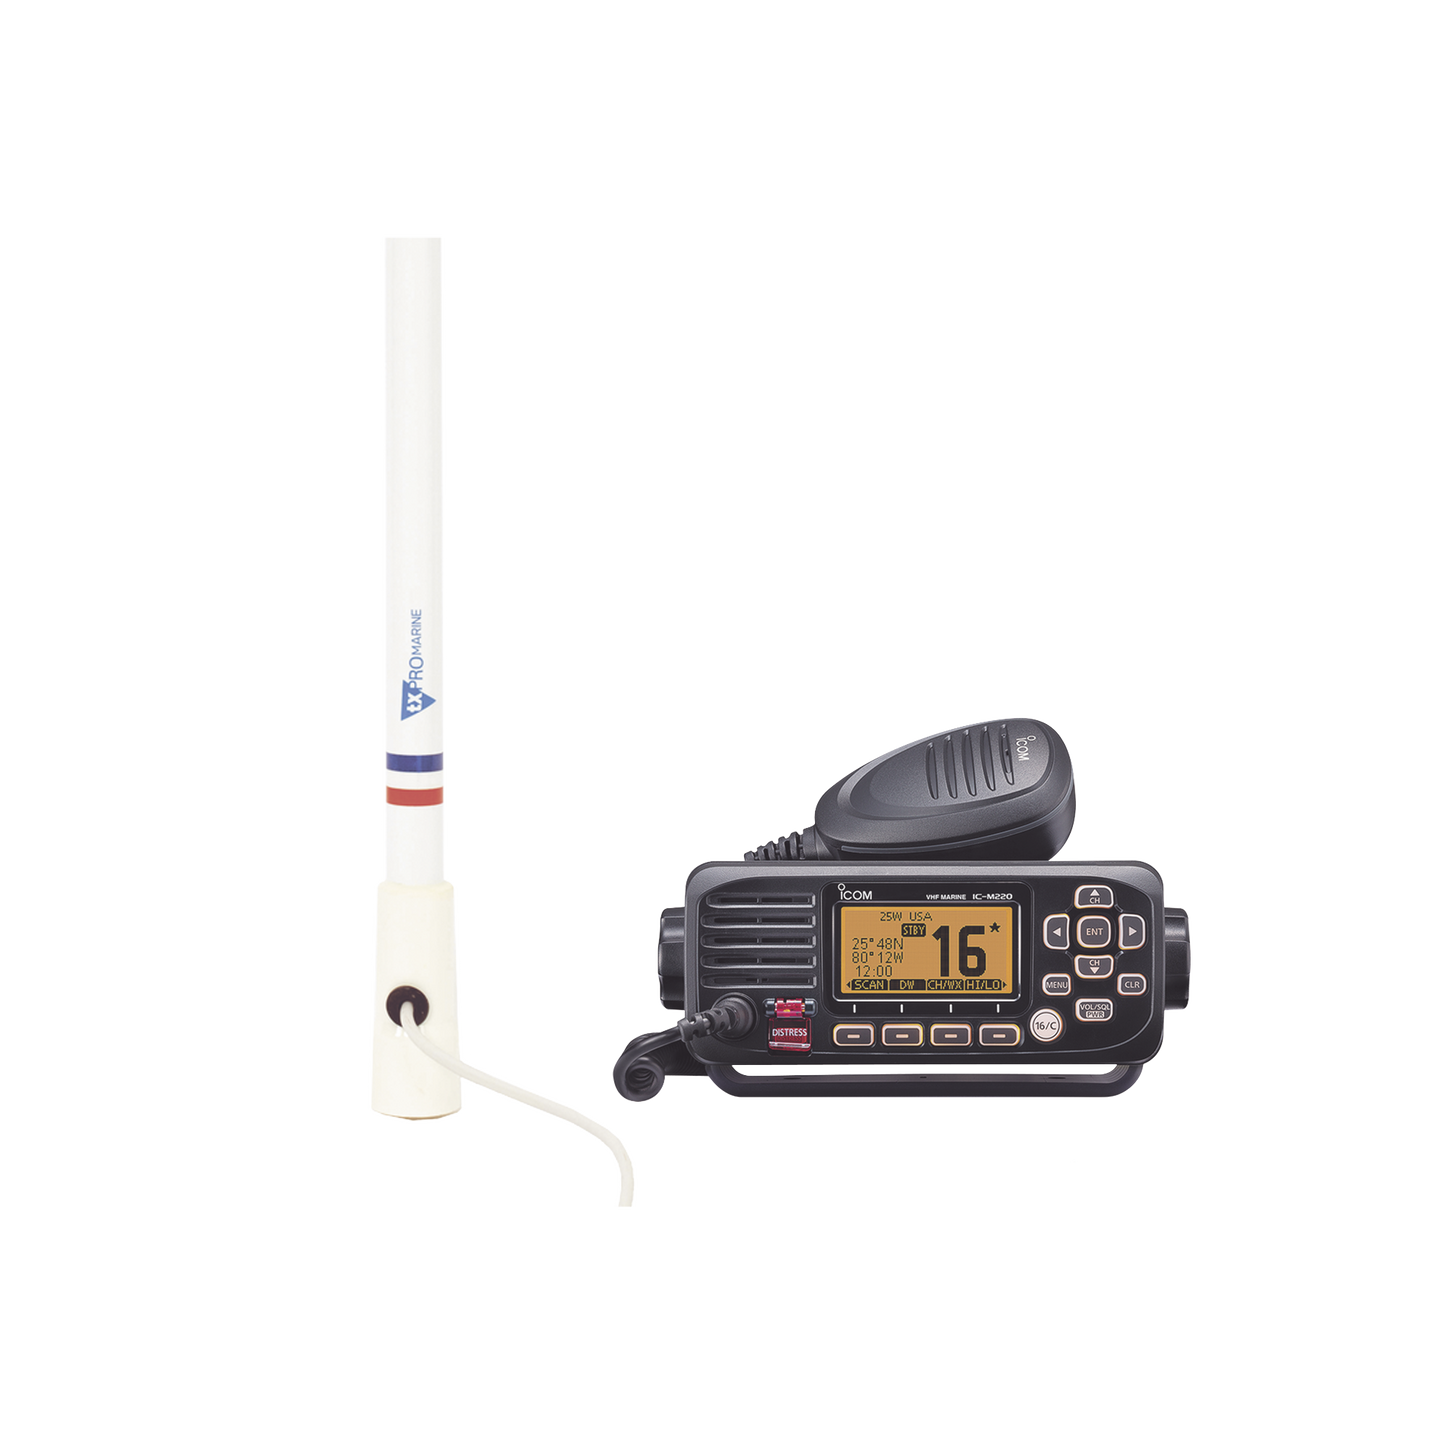 Kit de radio IC-M220 | mas antena marina de fibra de vidrio TX-5206-SYS y soporte para antena 4186